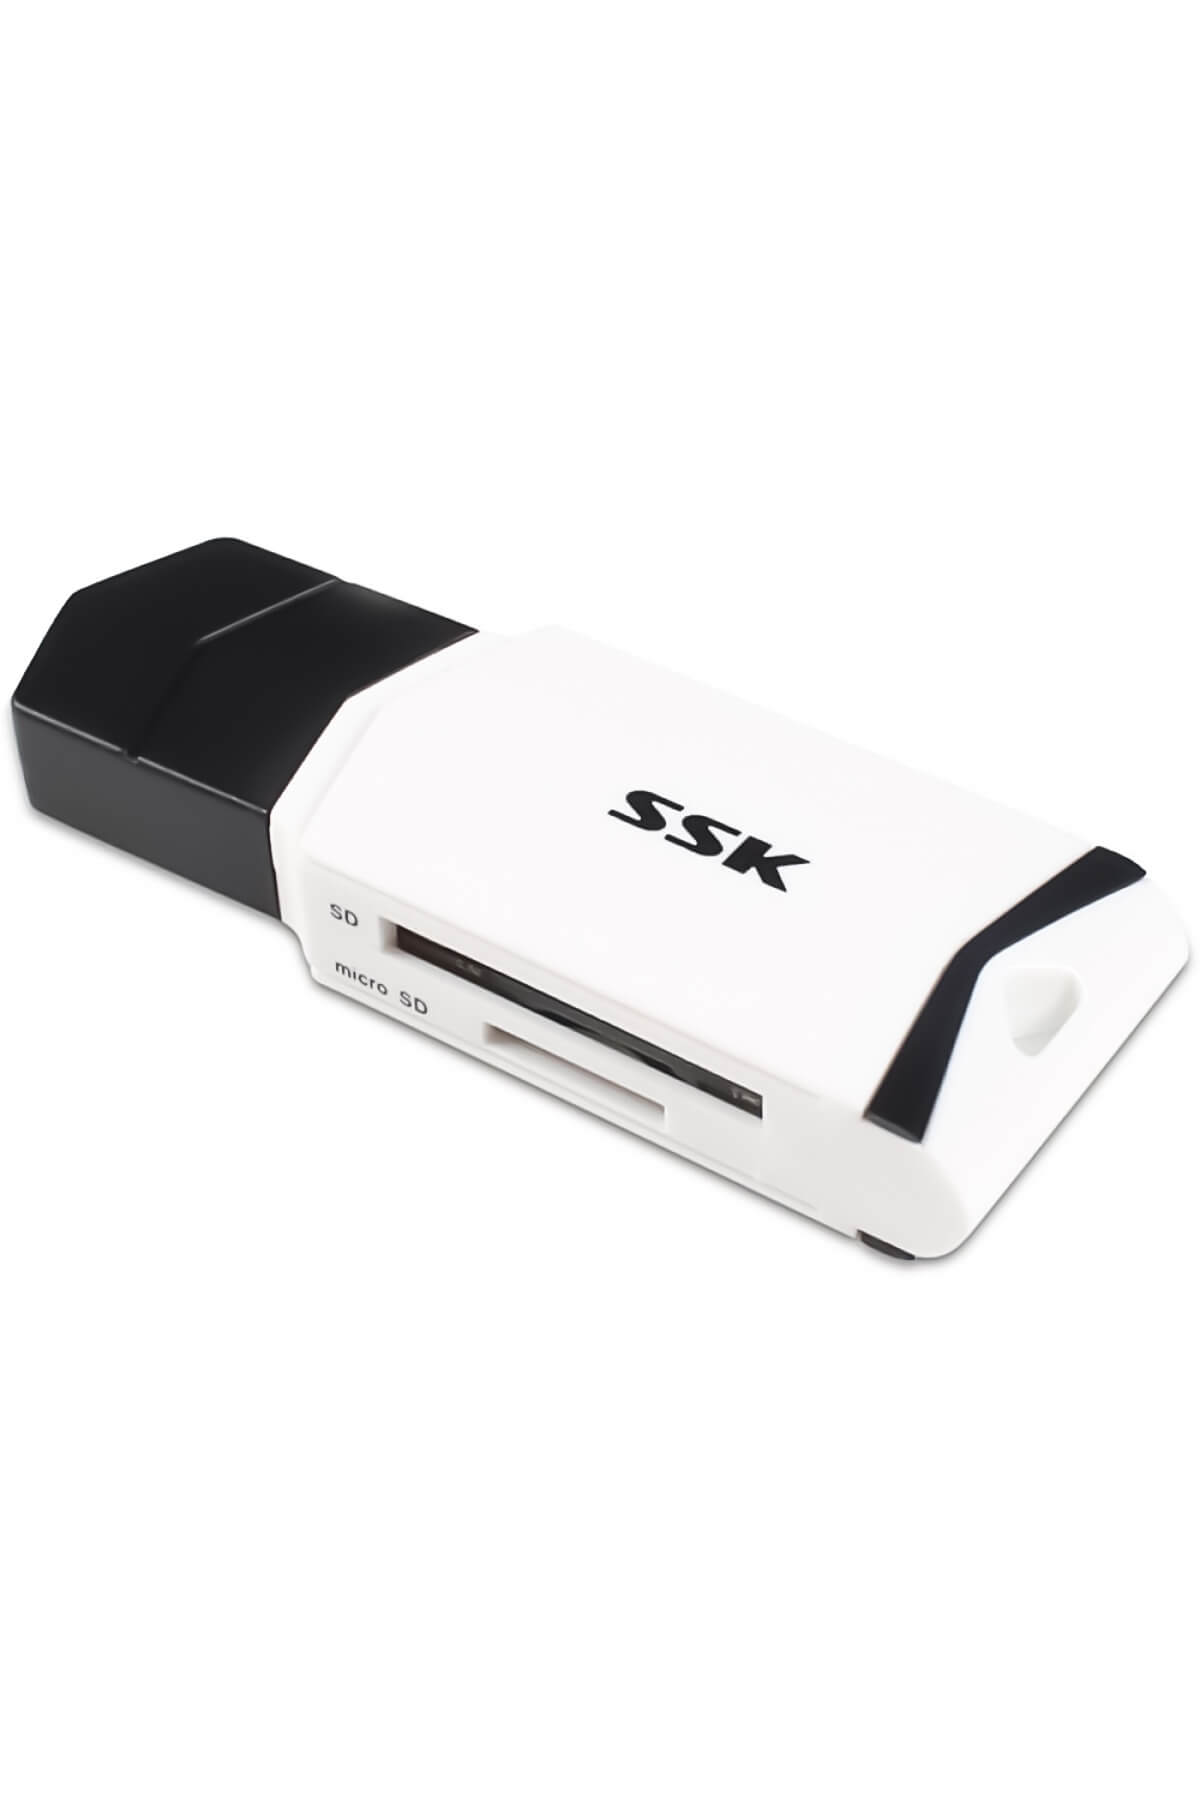 SSK  SCRM601 2'si 1 Arada Yüksek Hızlı USB 3.0 SD / TF Kart Okuyucu